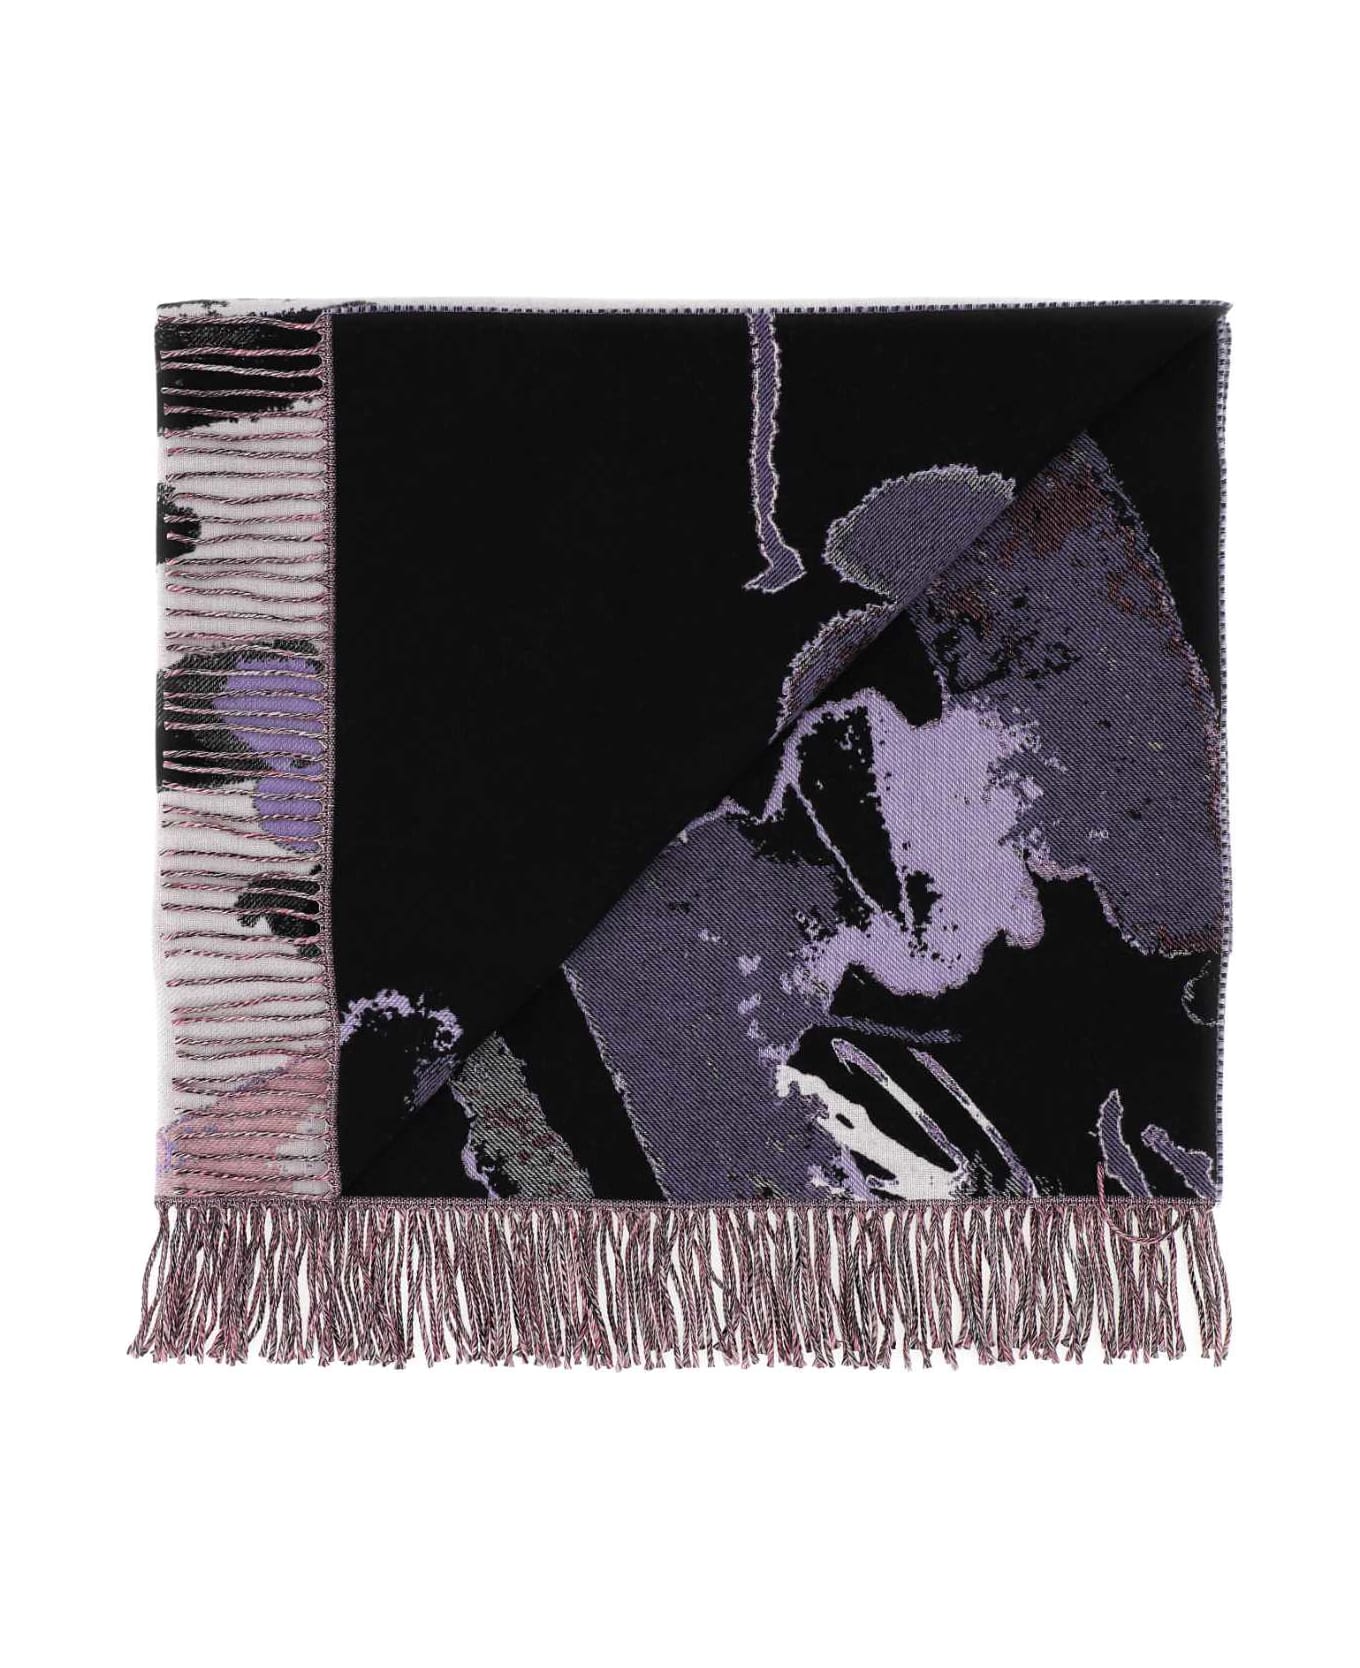 Alexander McQueen Embroidered Wool Blend Blanket - 9272